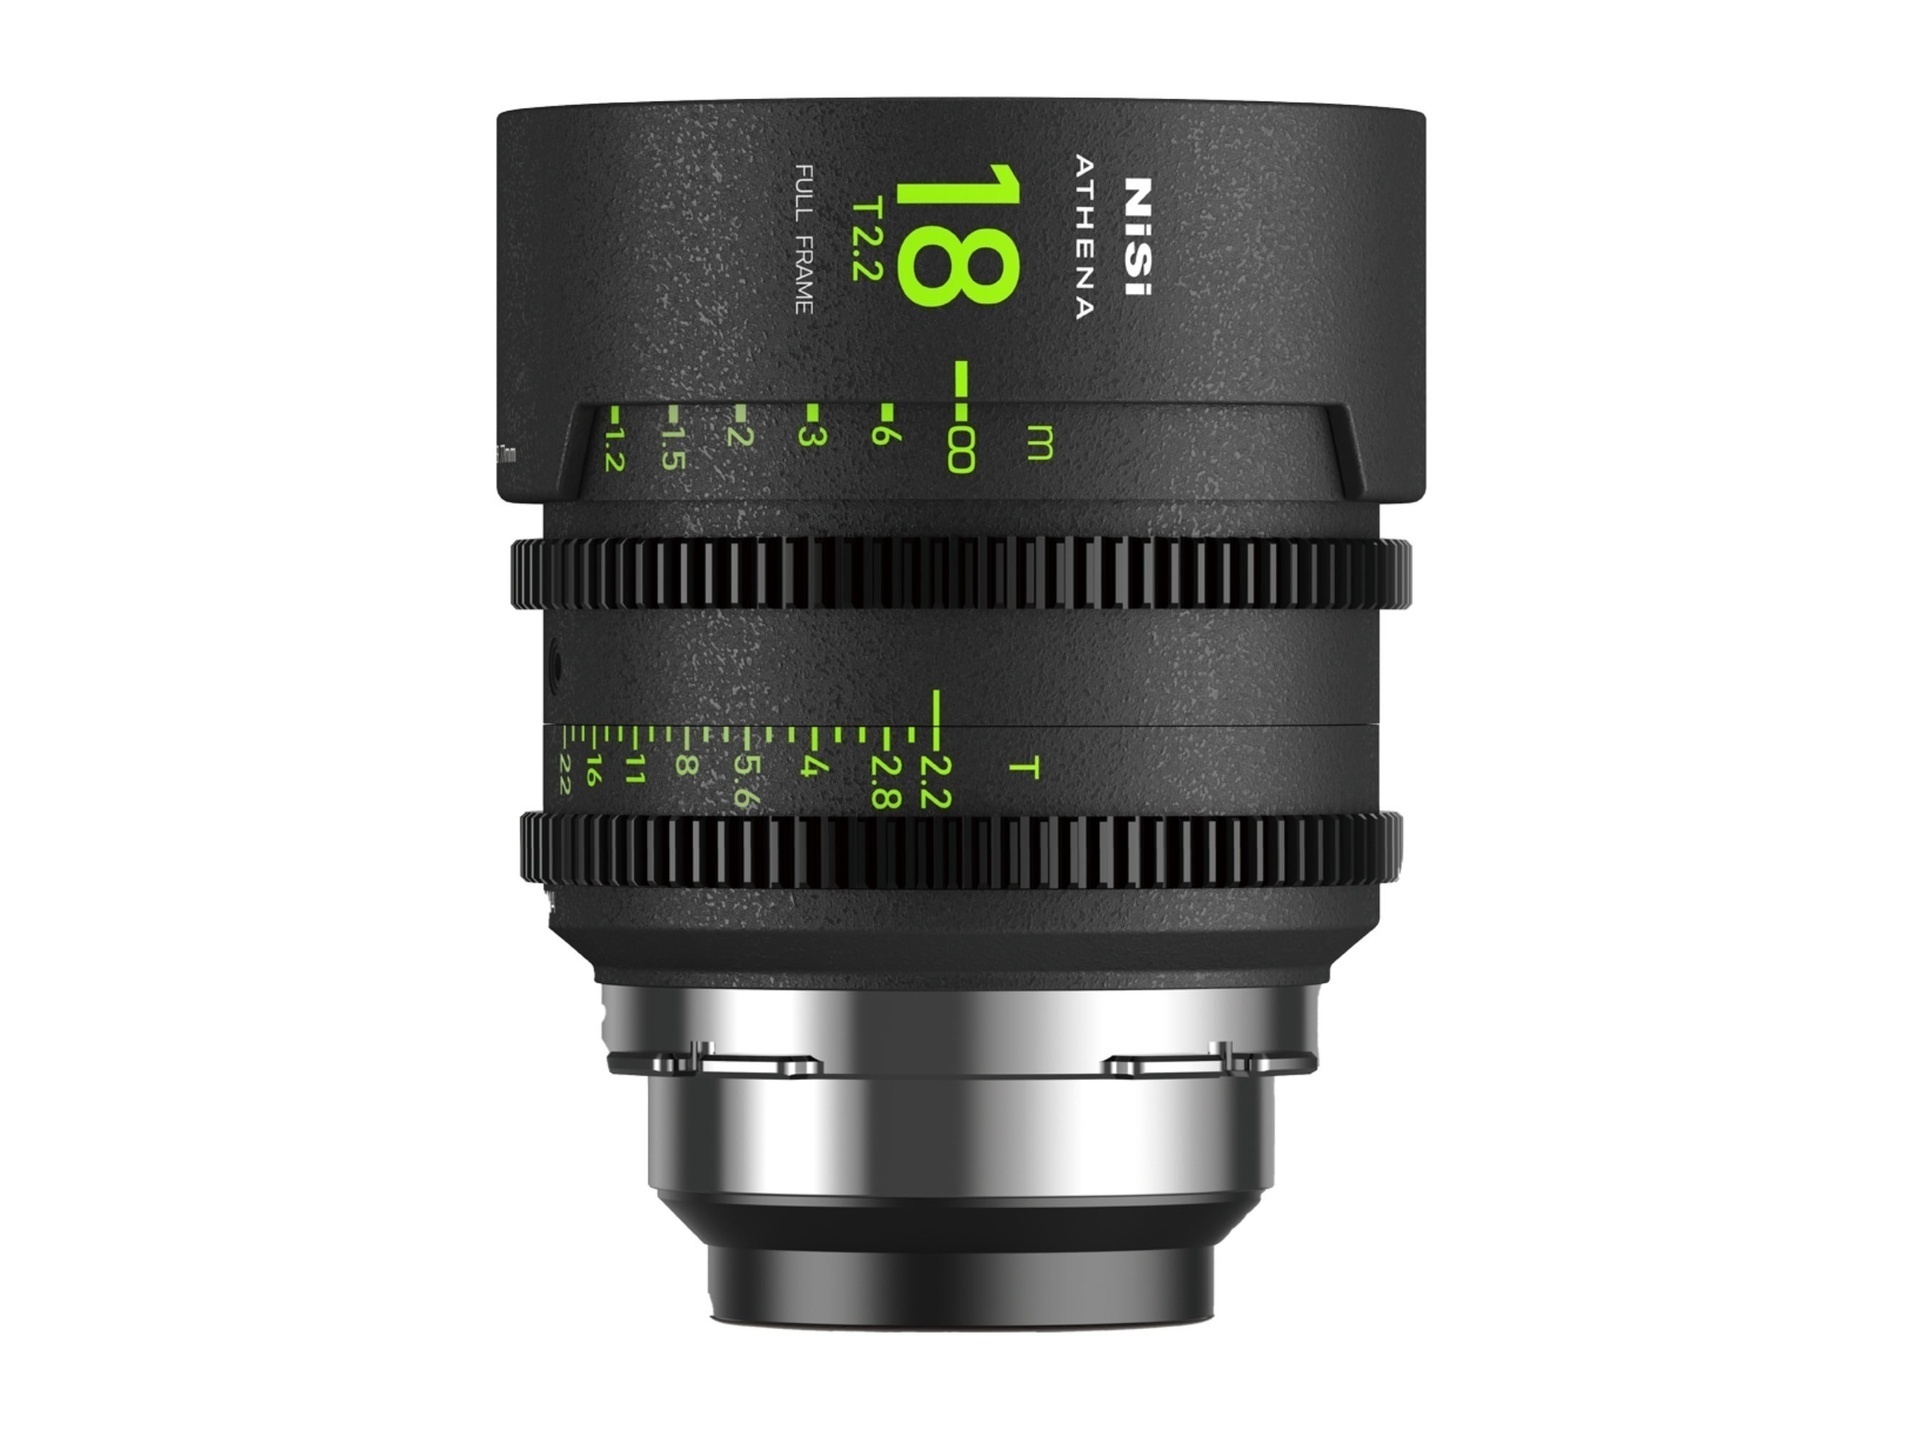 NiSi ATHENA PRIME 18mm T2.2 Full Frame Cinema Lens (RF Mount)